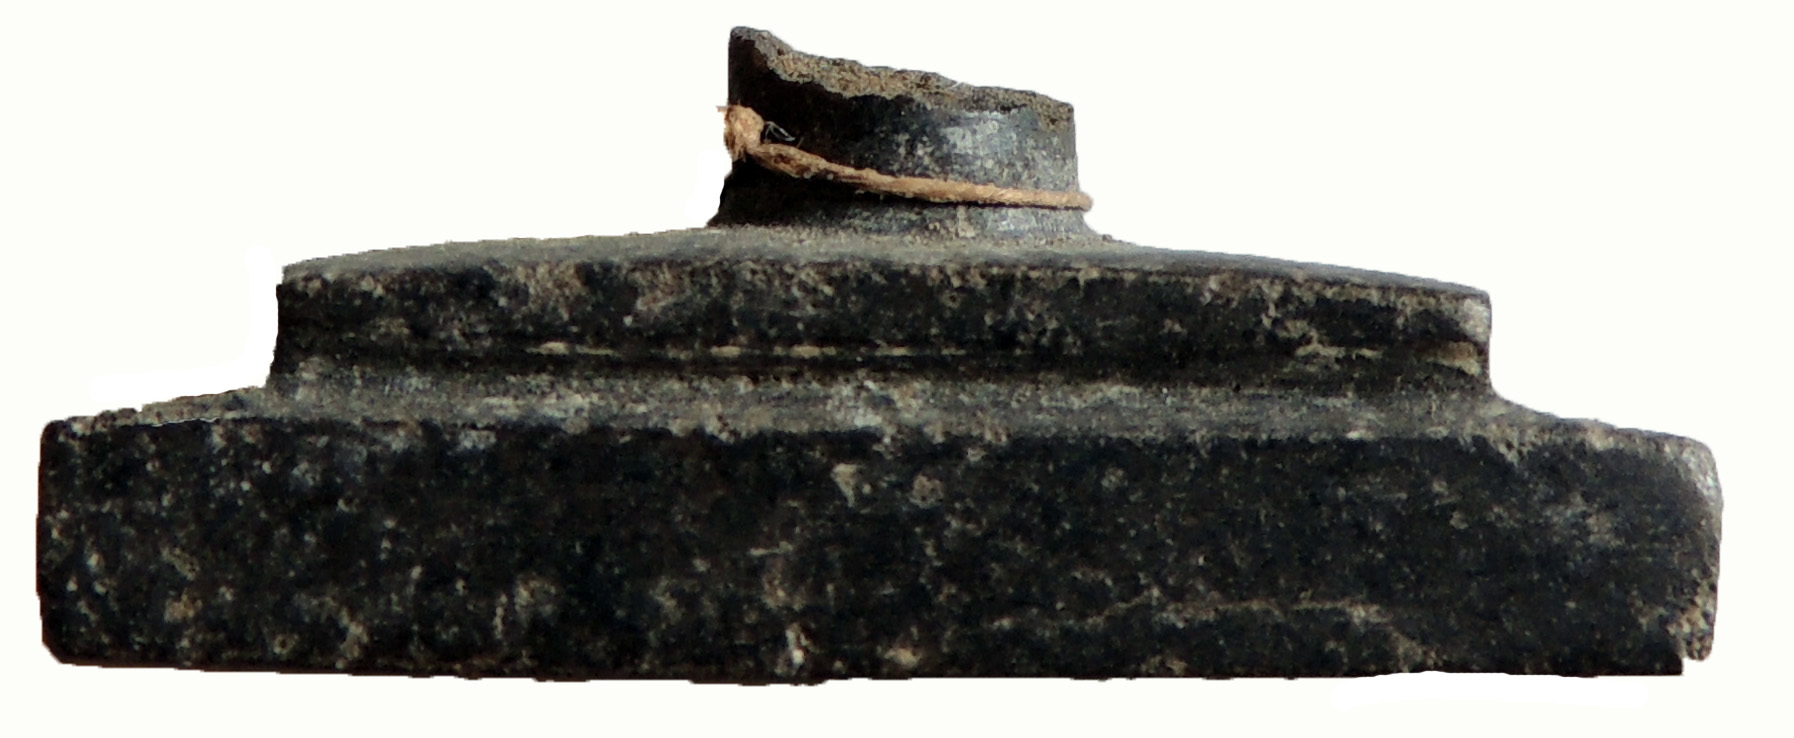 poggiatesta ueres (amuleto) (SECOLI/ VII a.C)